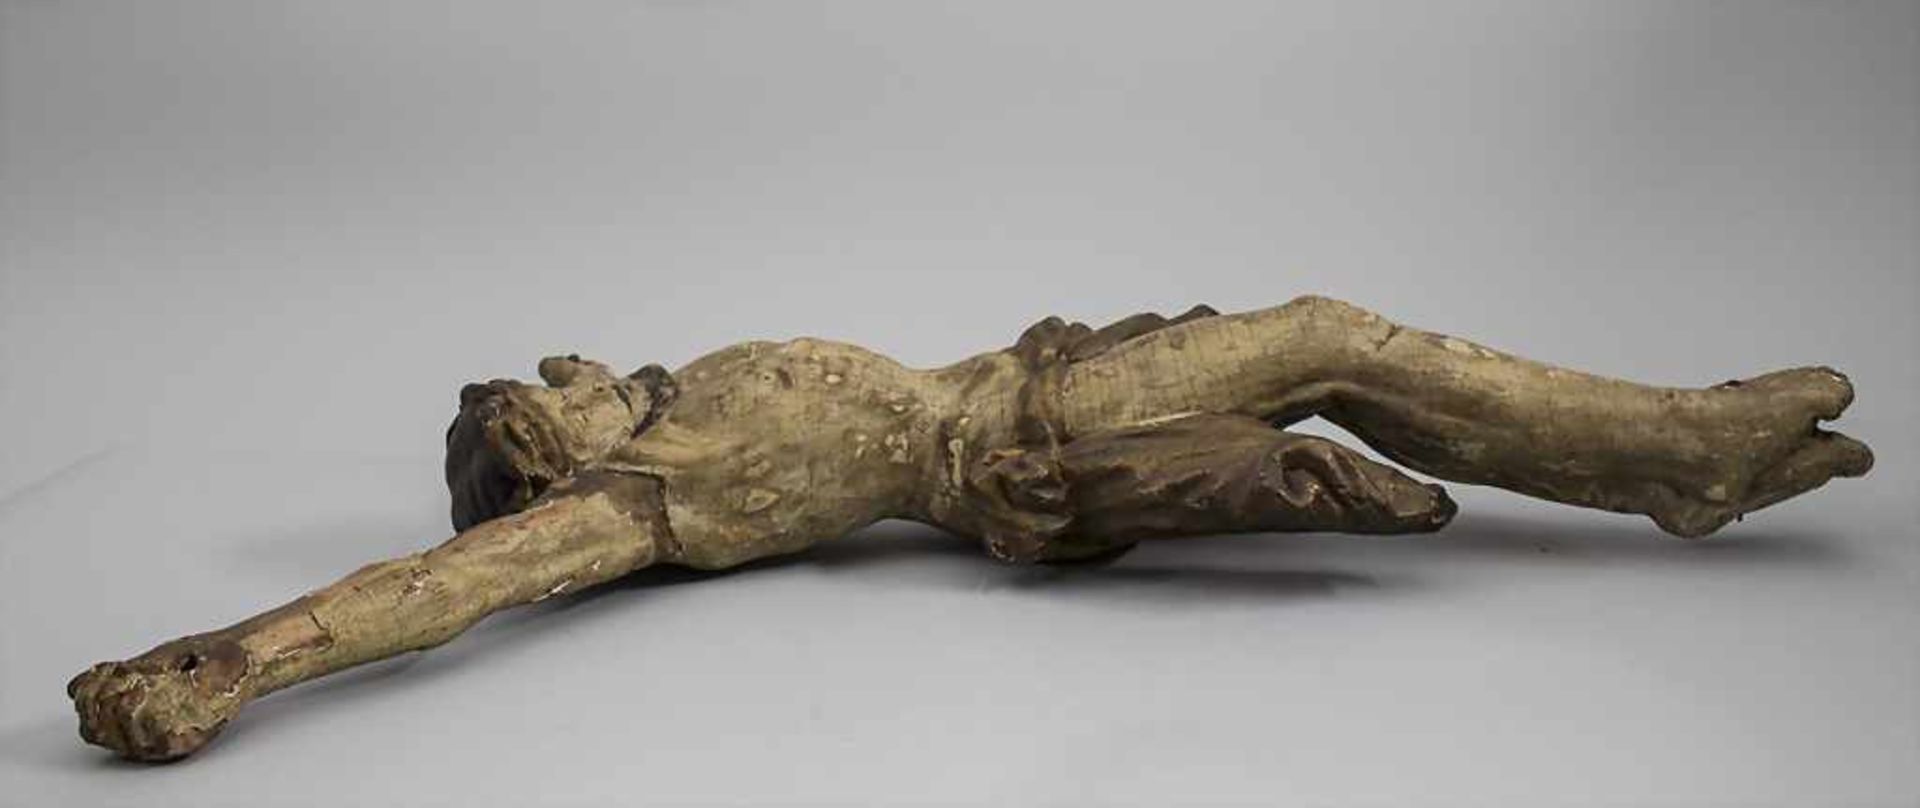 Holzskulptur 'Corpus Christi' / A wooden sculpture 'Corpus Christi' - Image 2 of 9